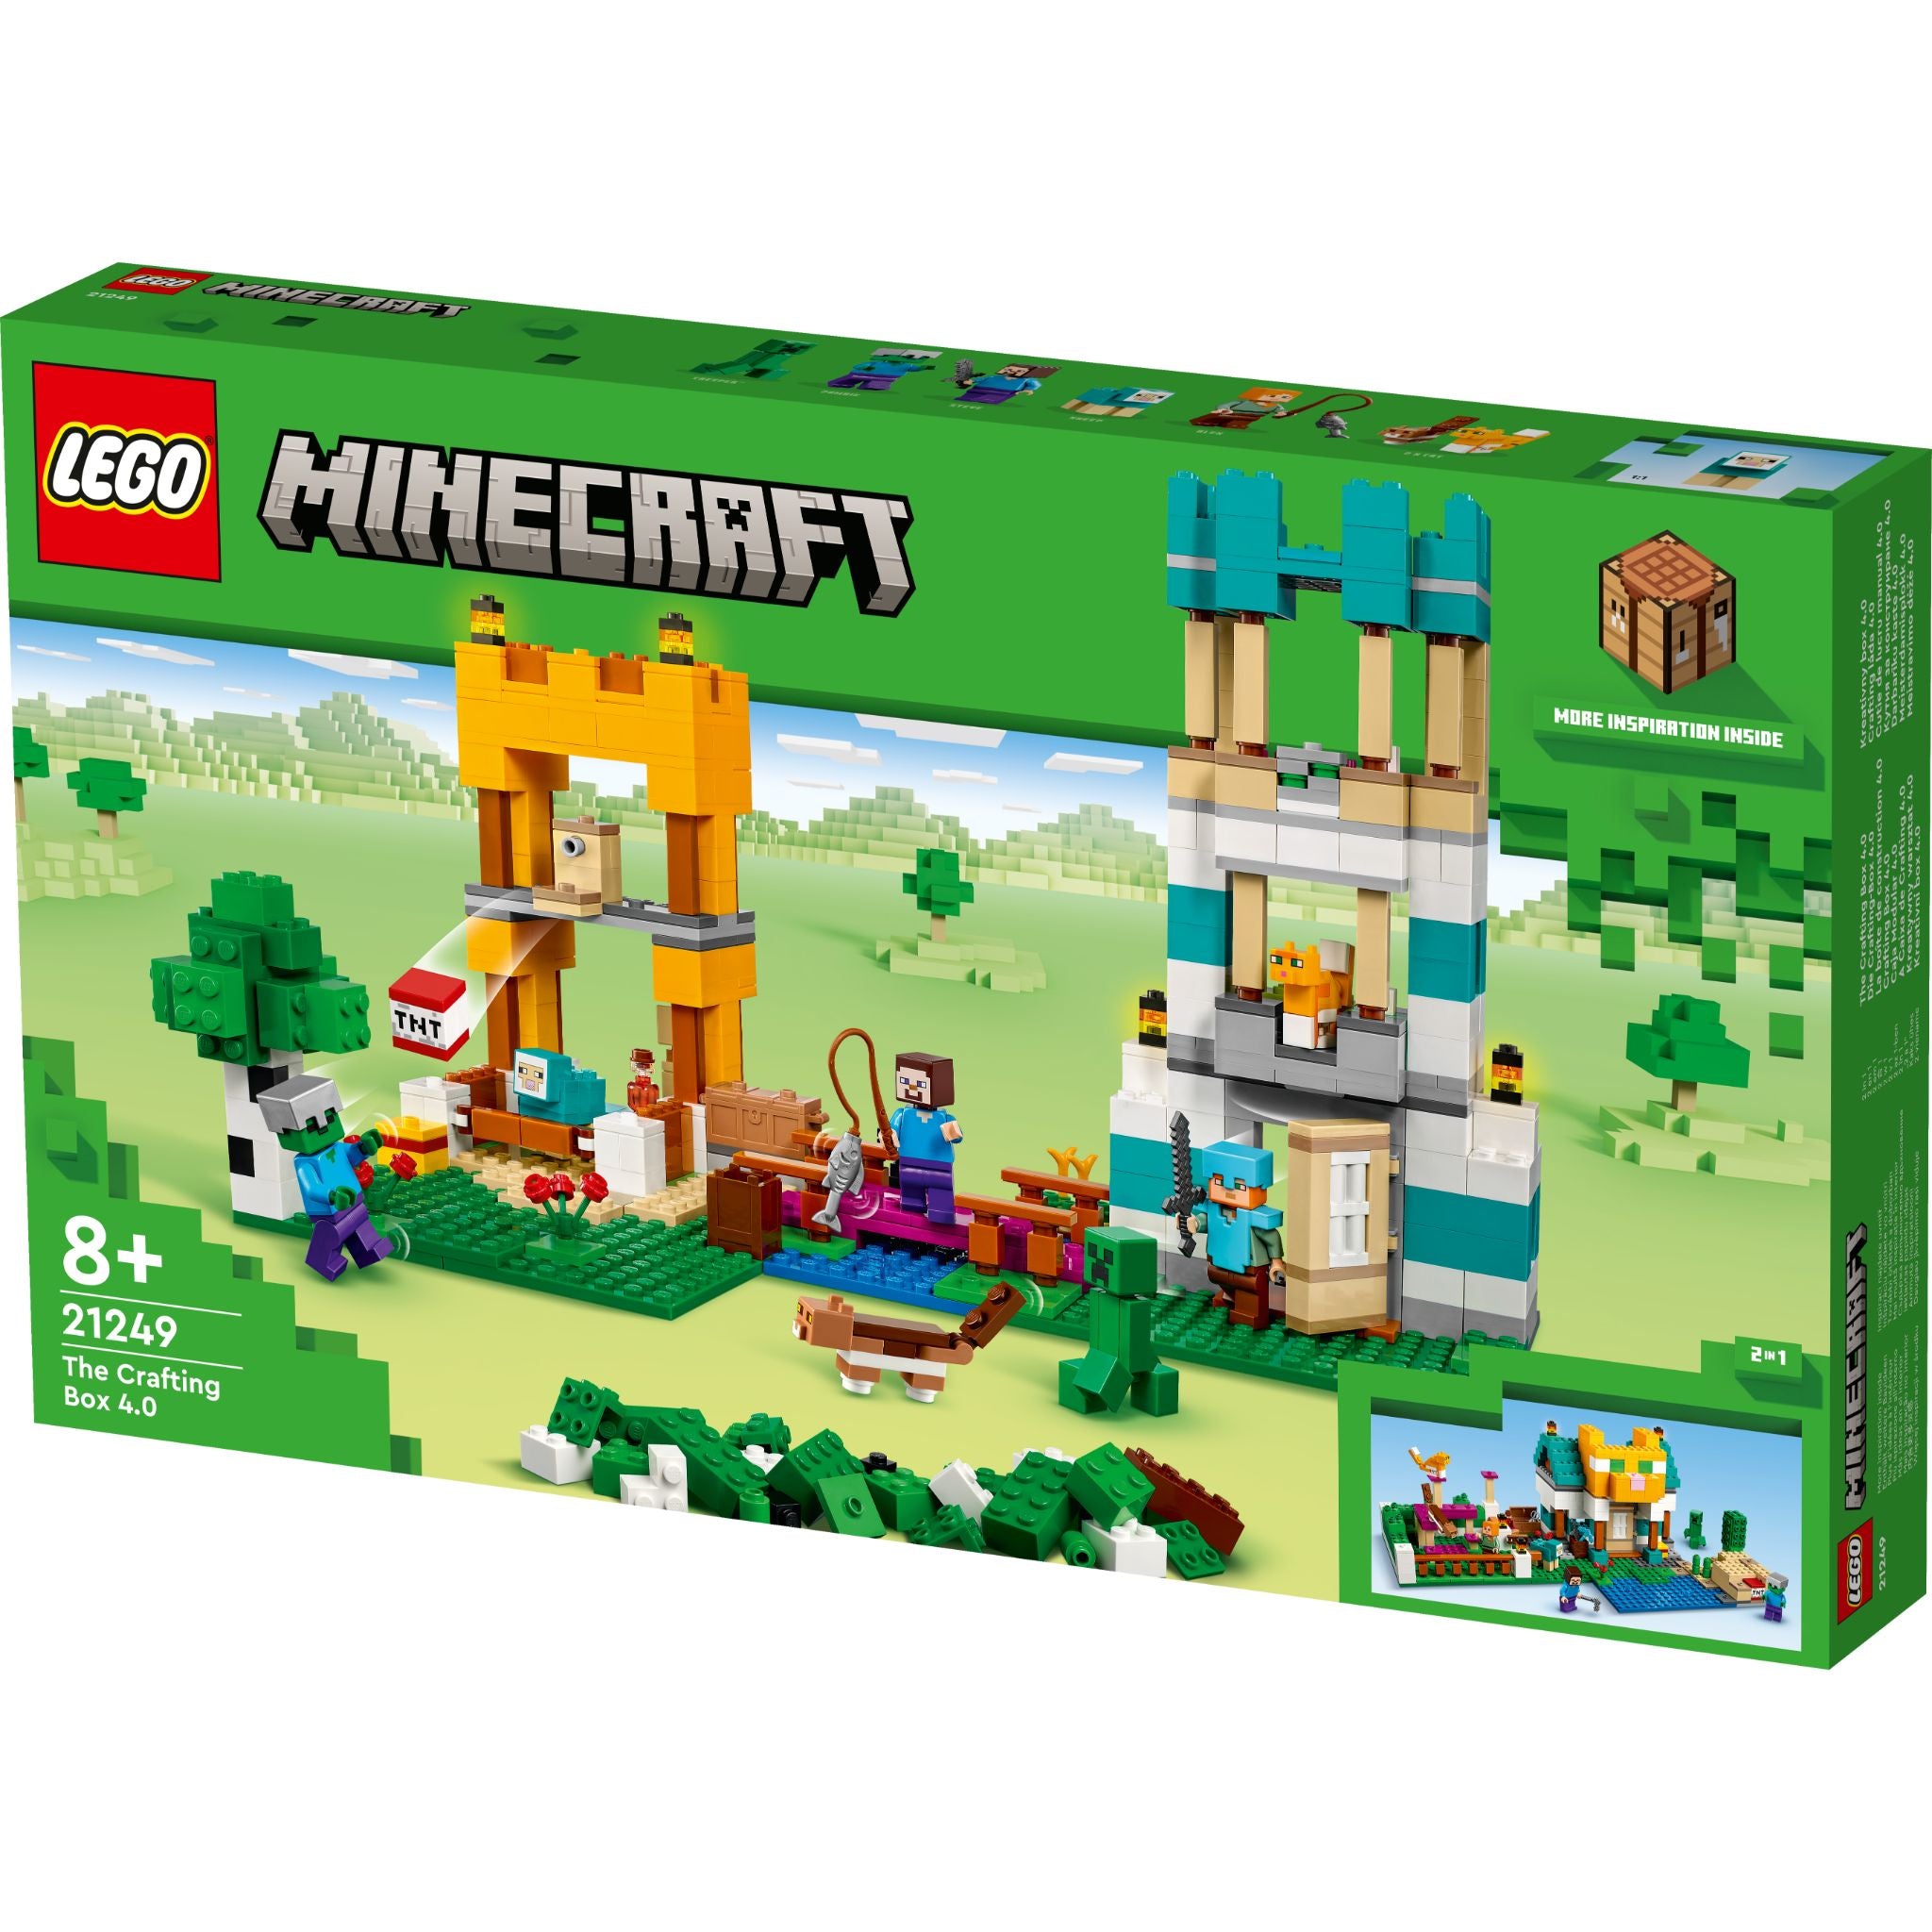 LEGO Minecraft: The Crafting Box 4.0 (21249)